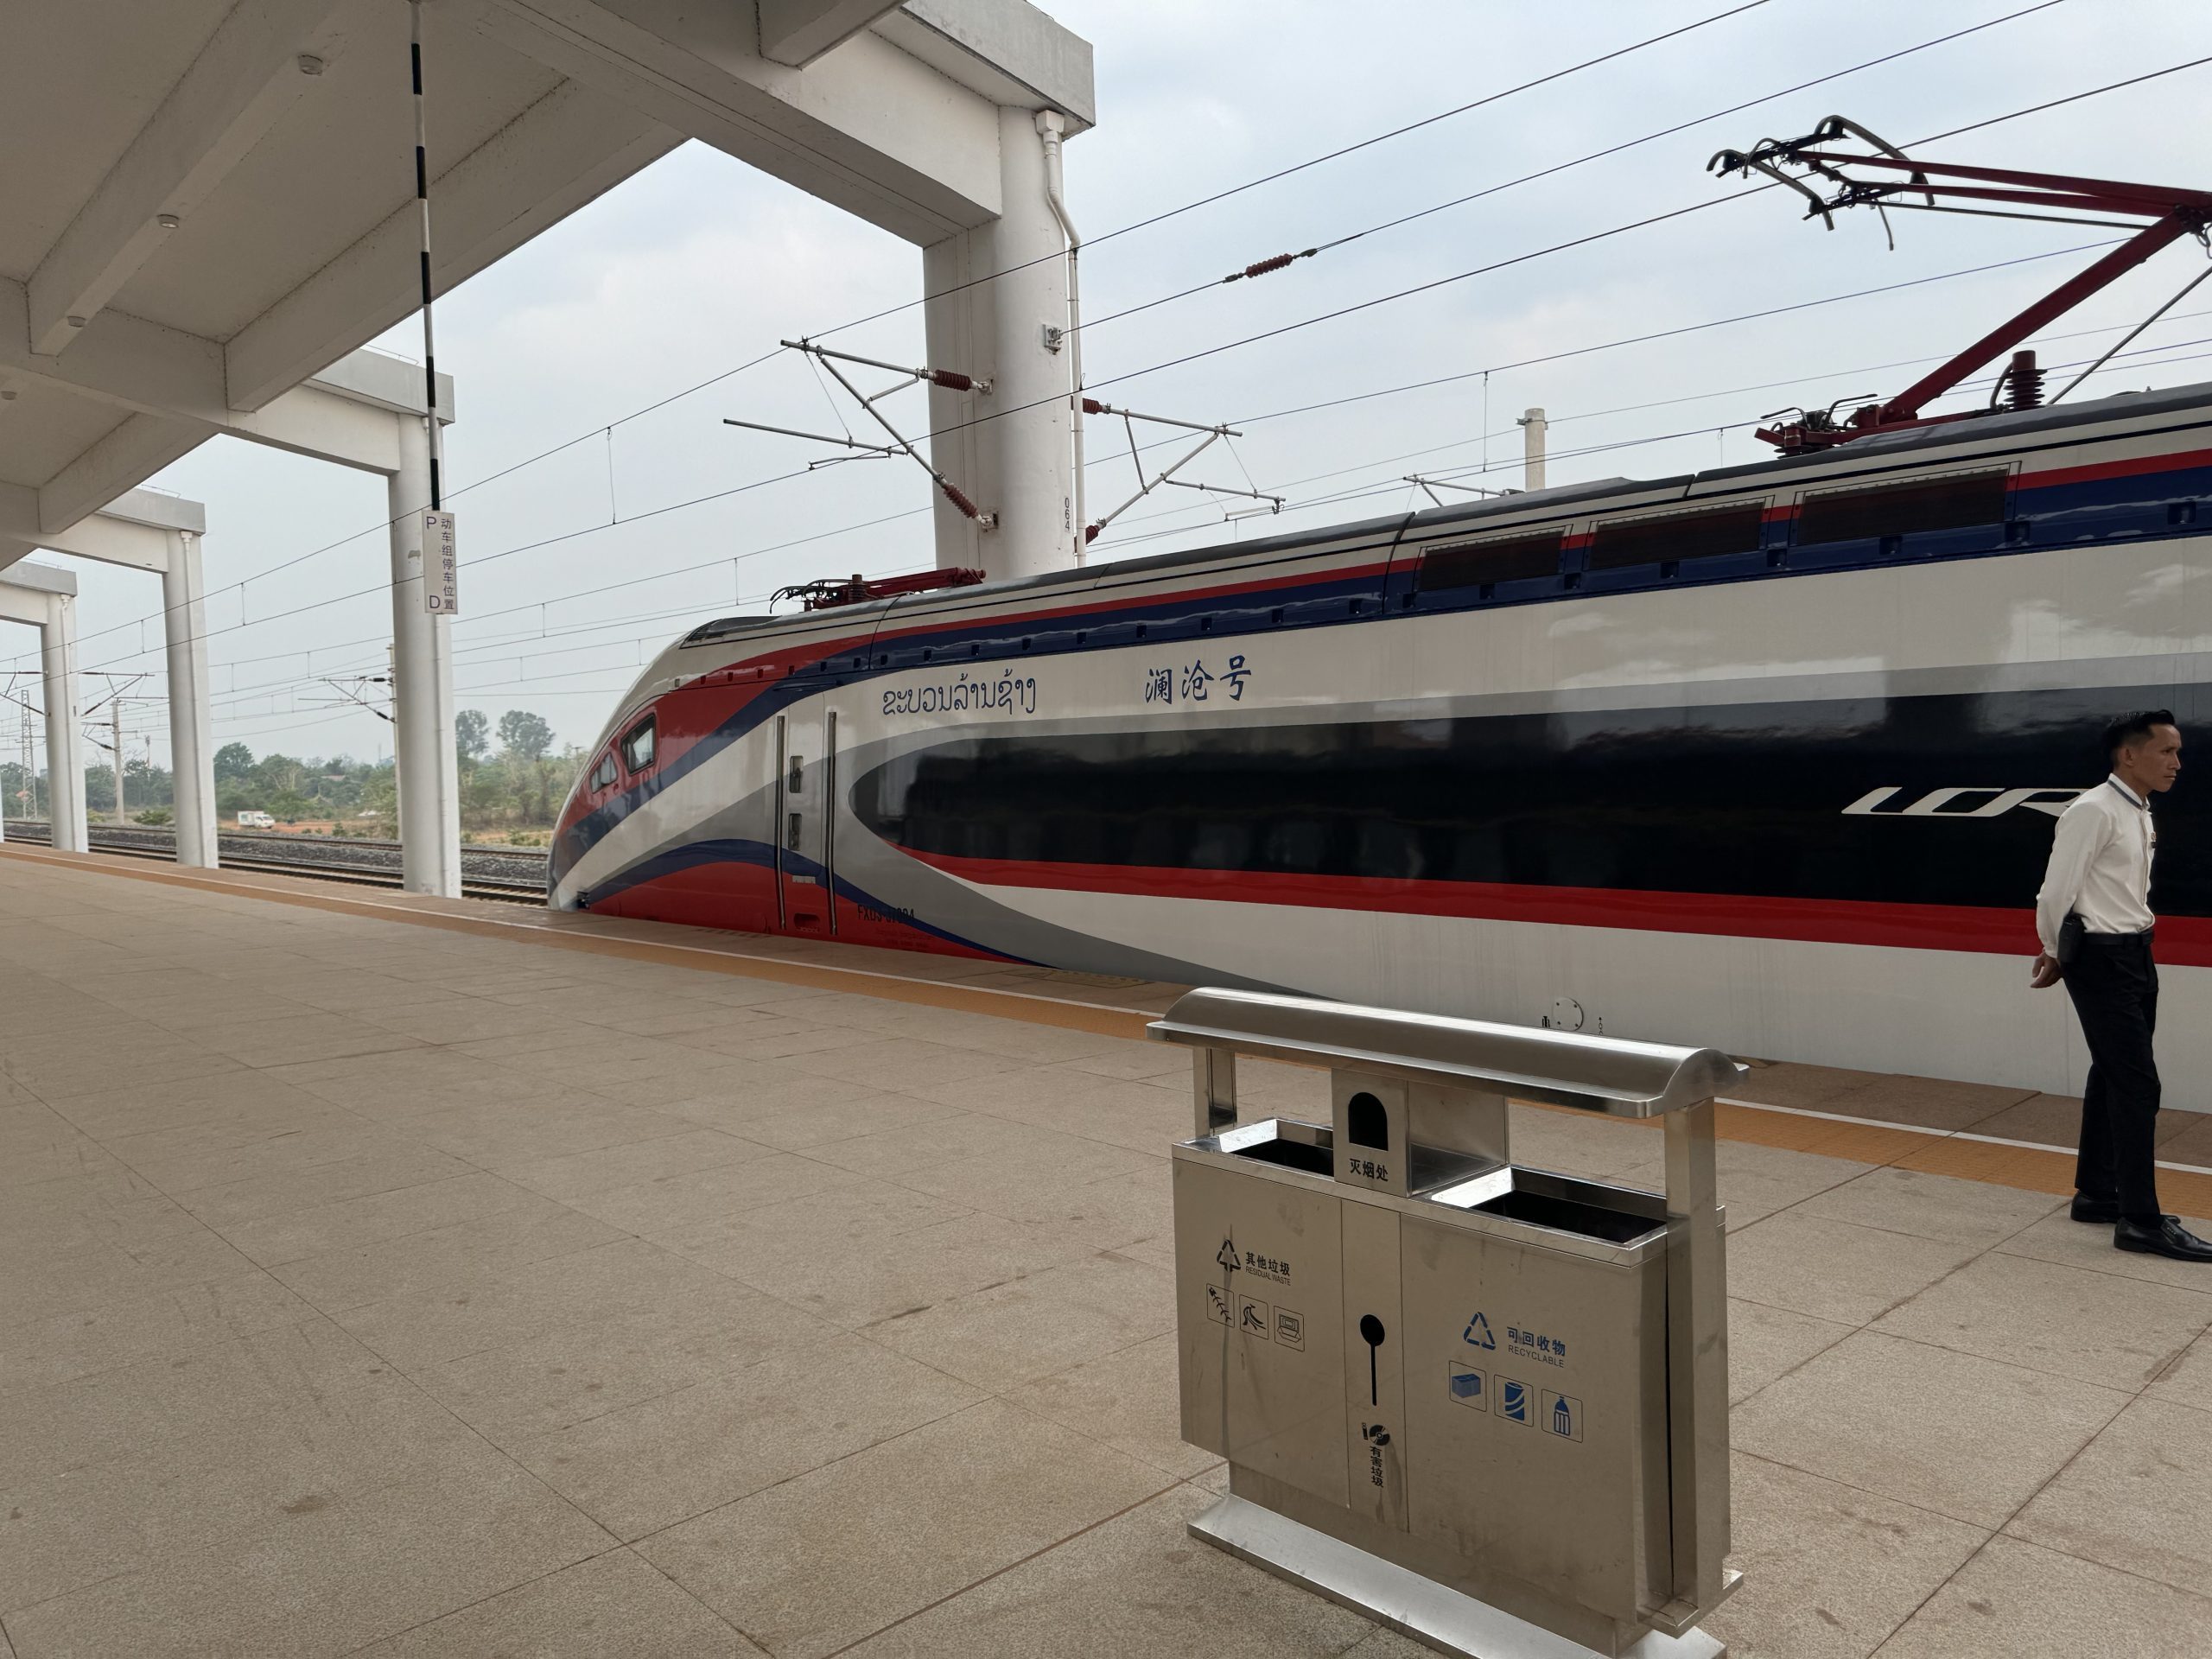 Laos High Speed Train (LCR)